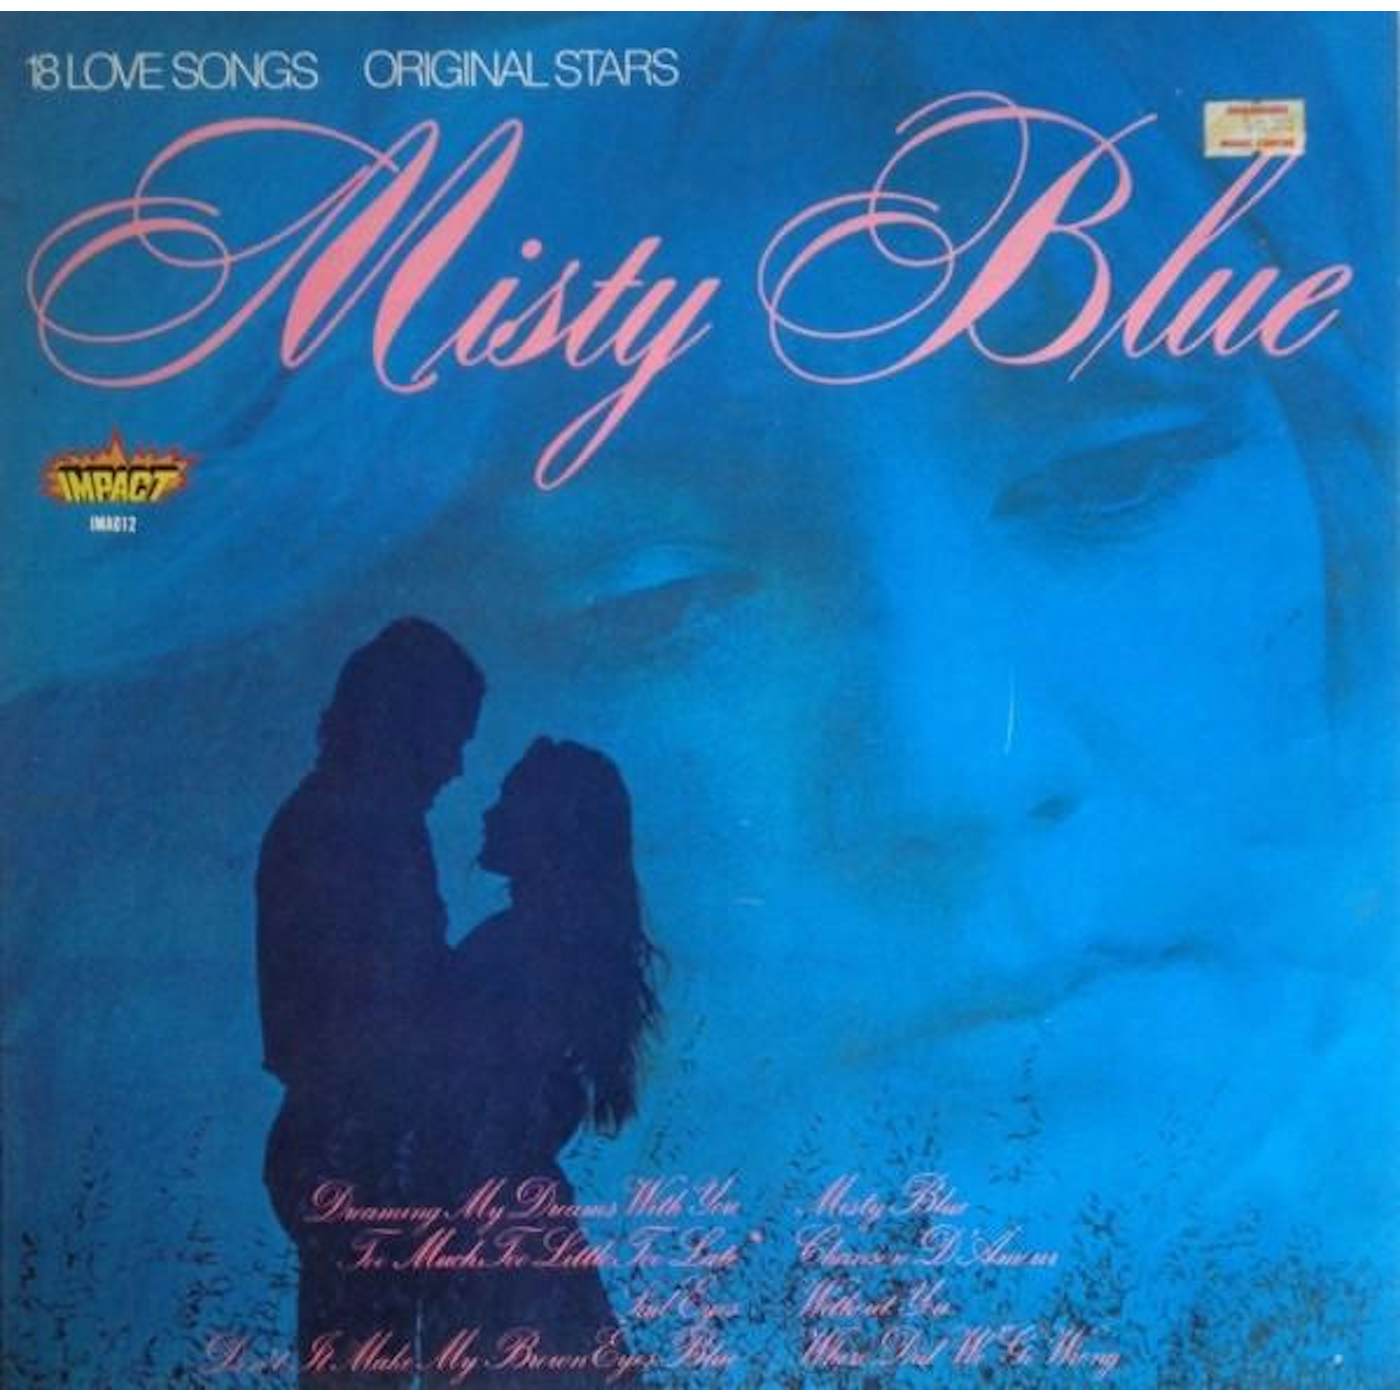 Dorothy Moore MISTY BLUE CD